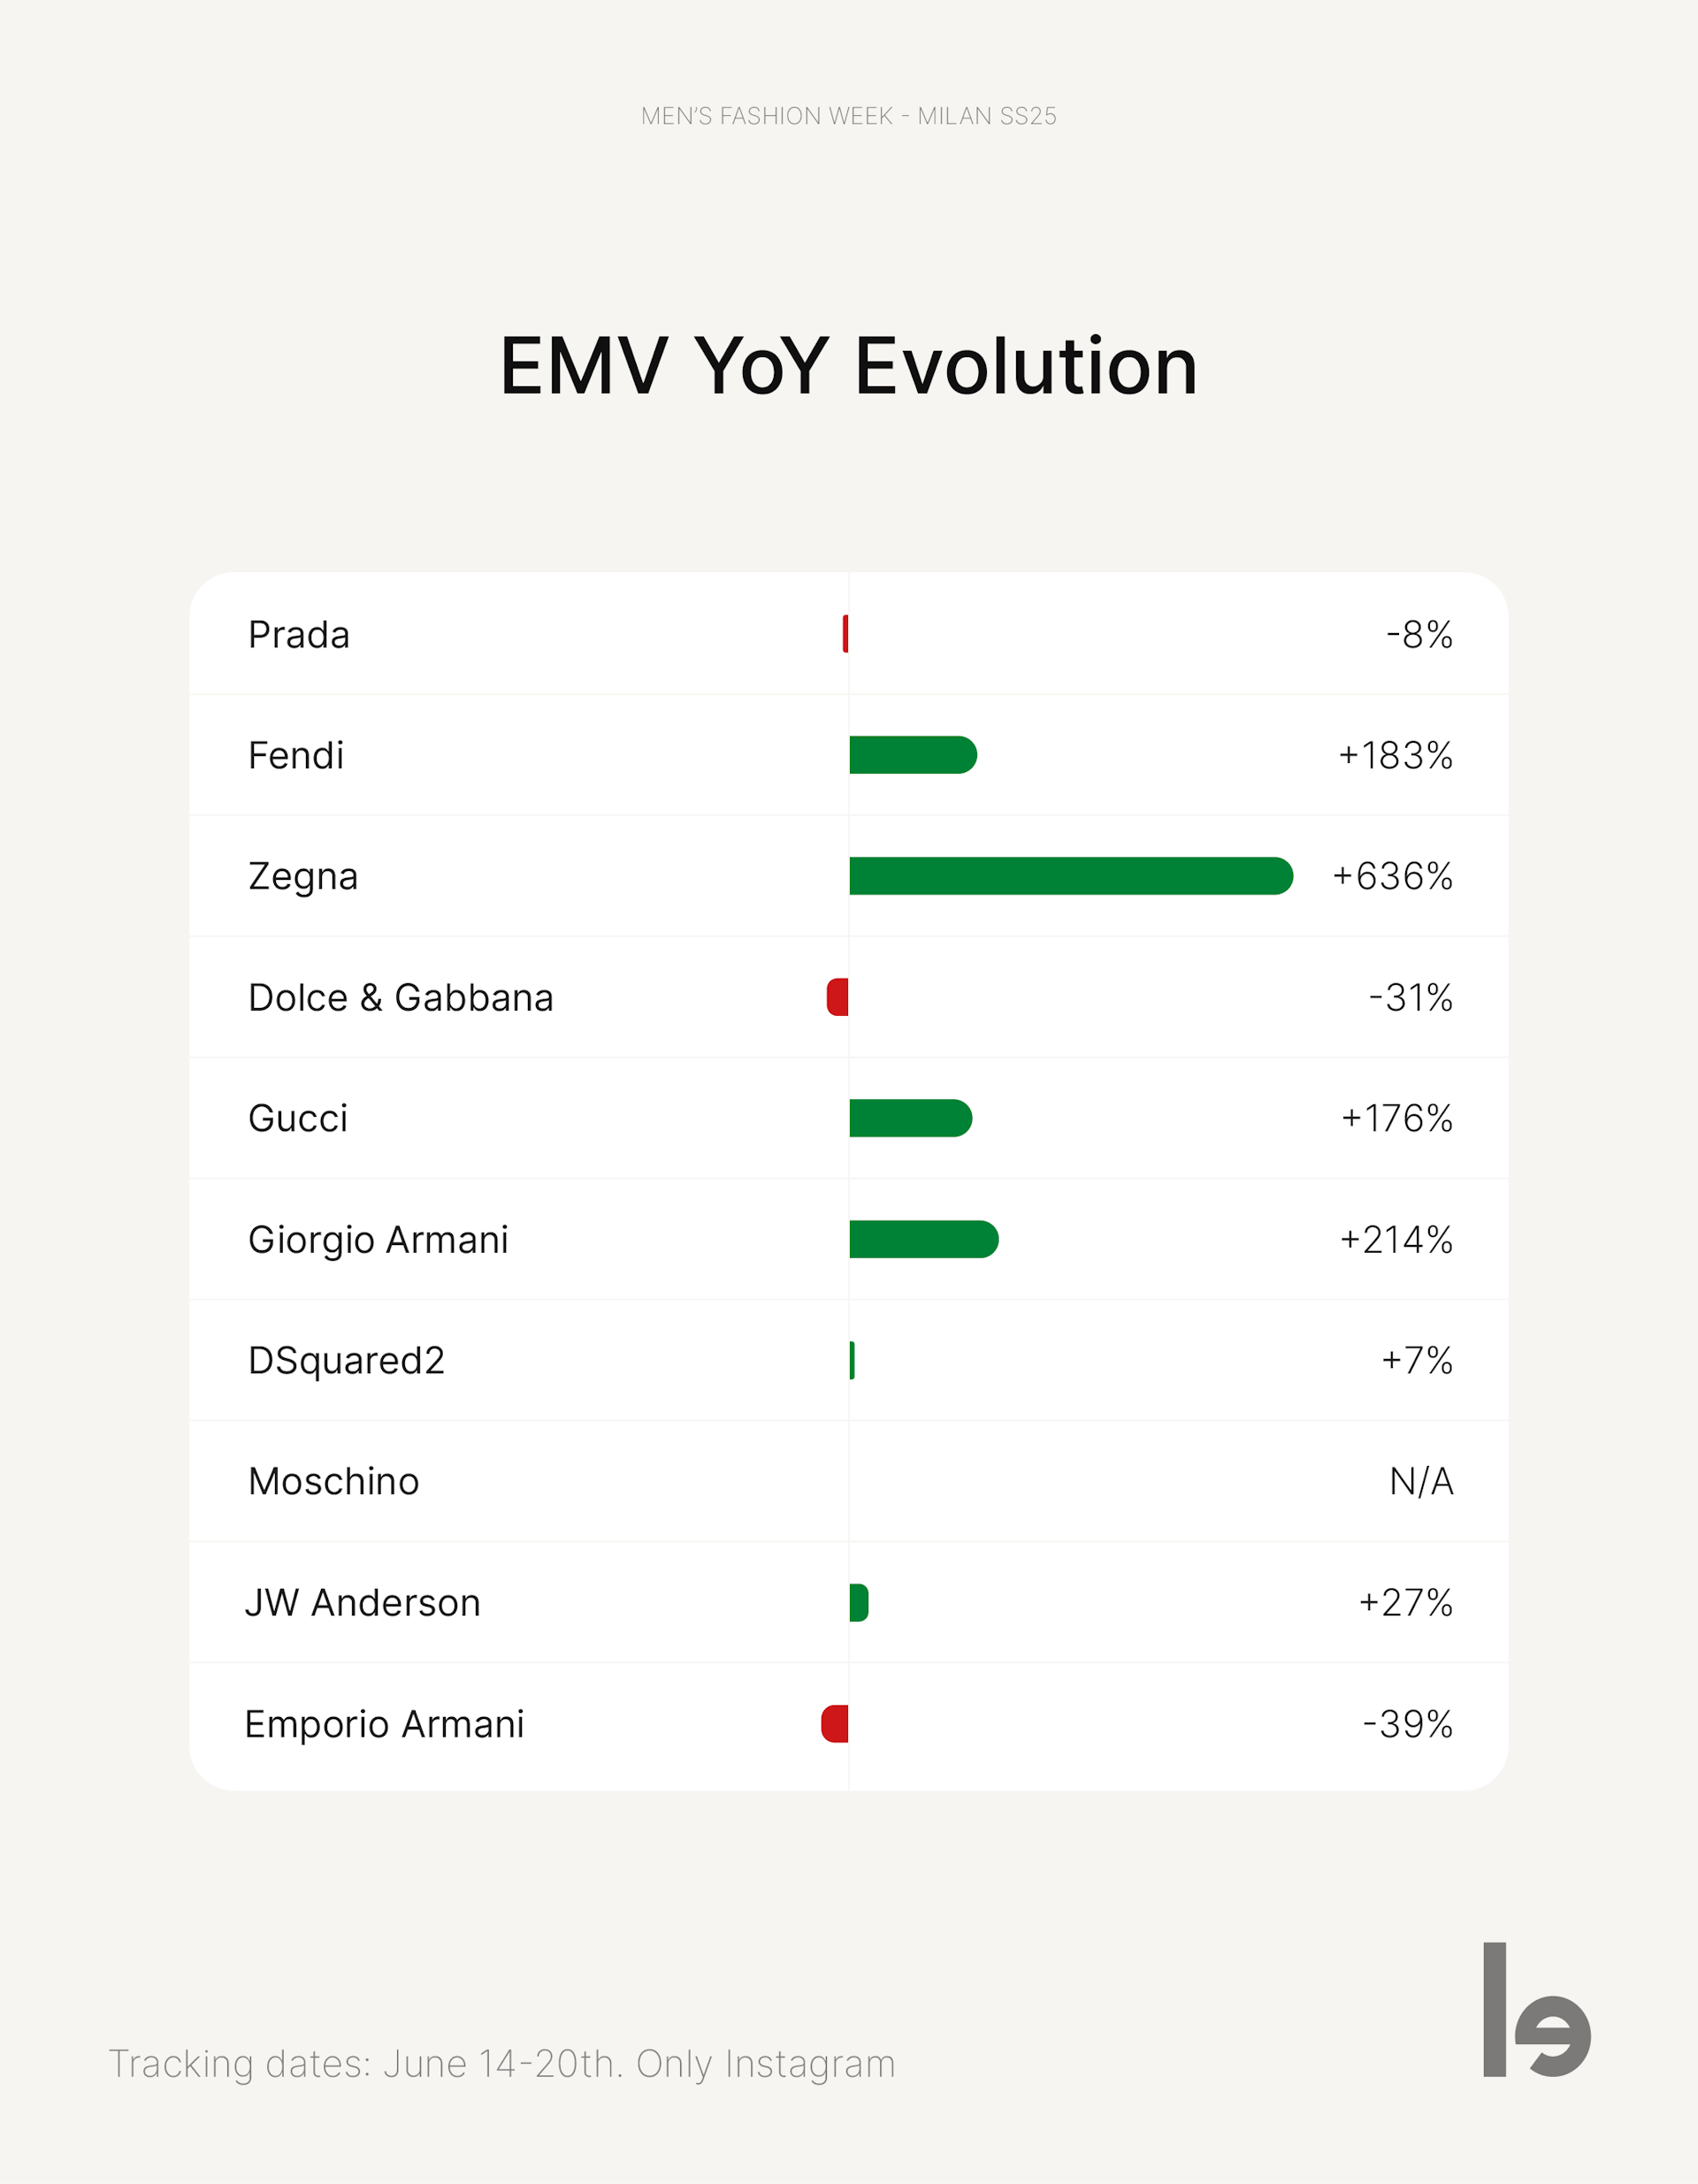 EMV evolution of top brands at MFW Menswear SS25.